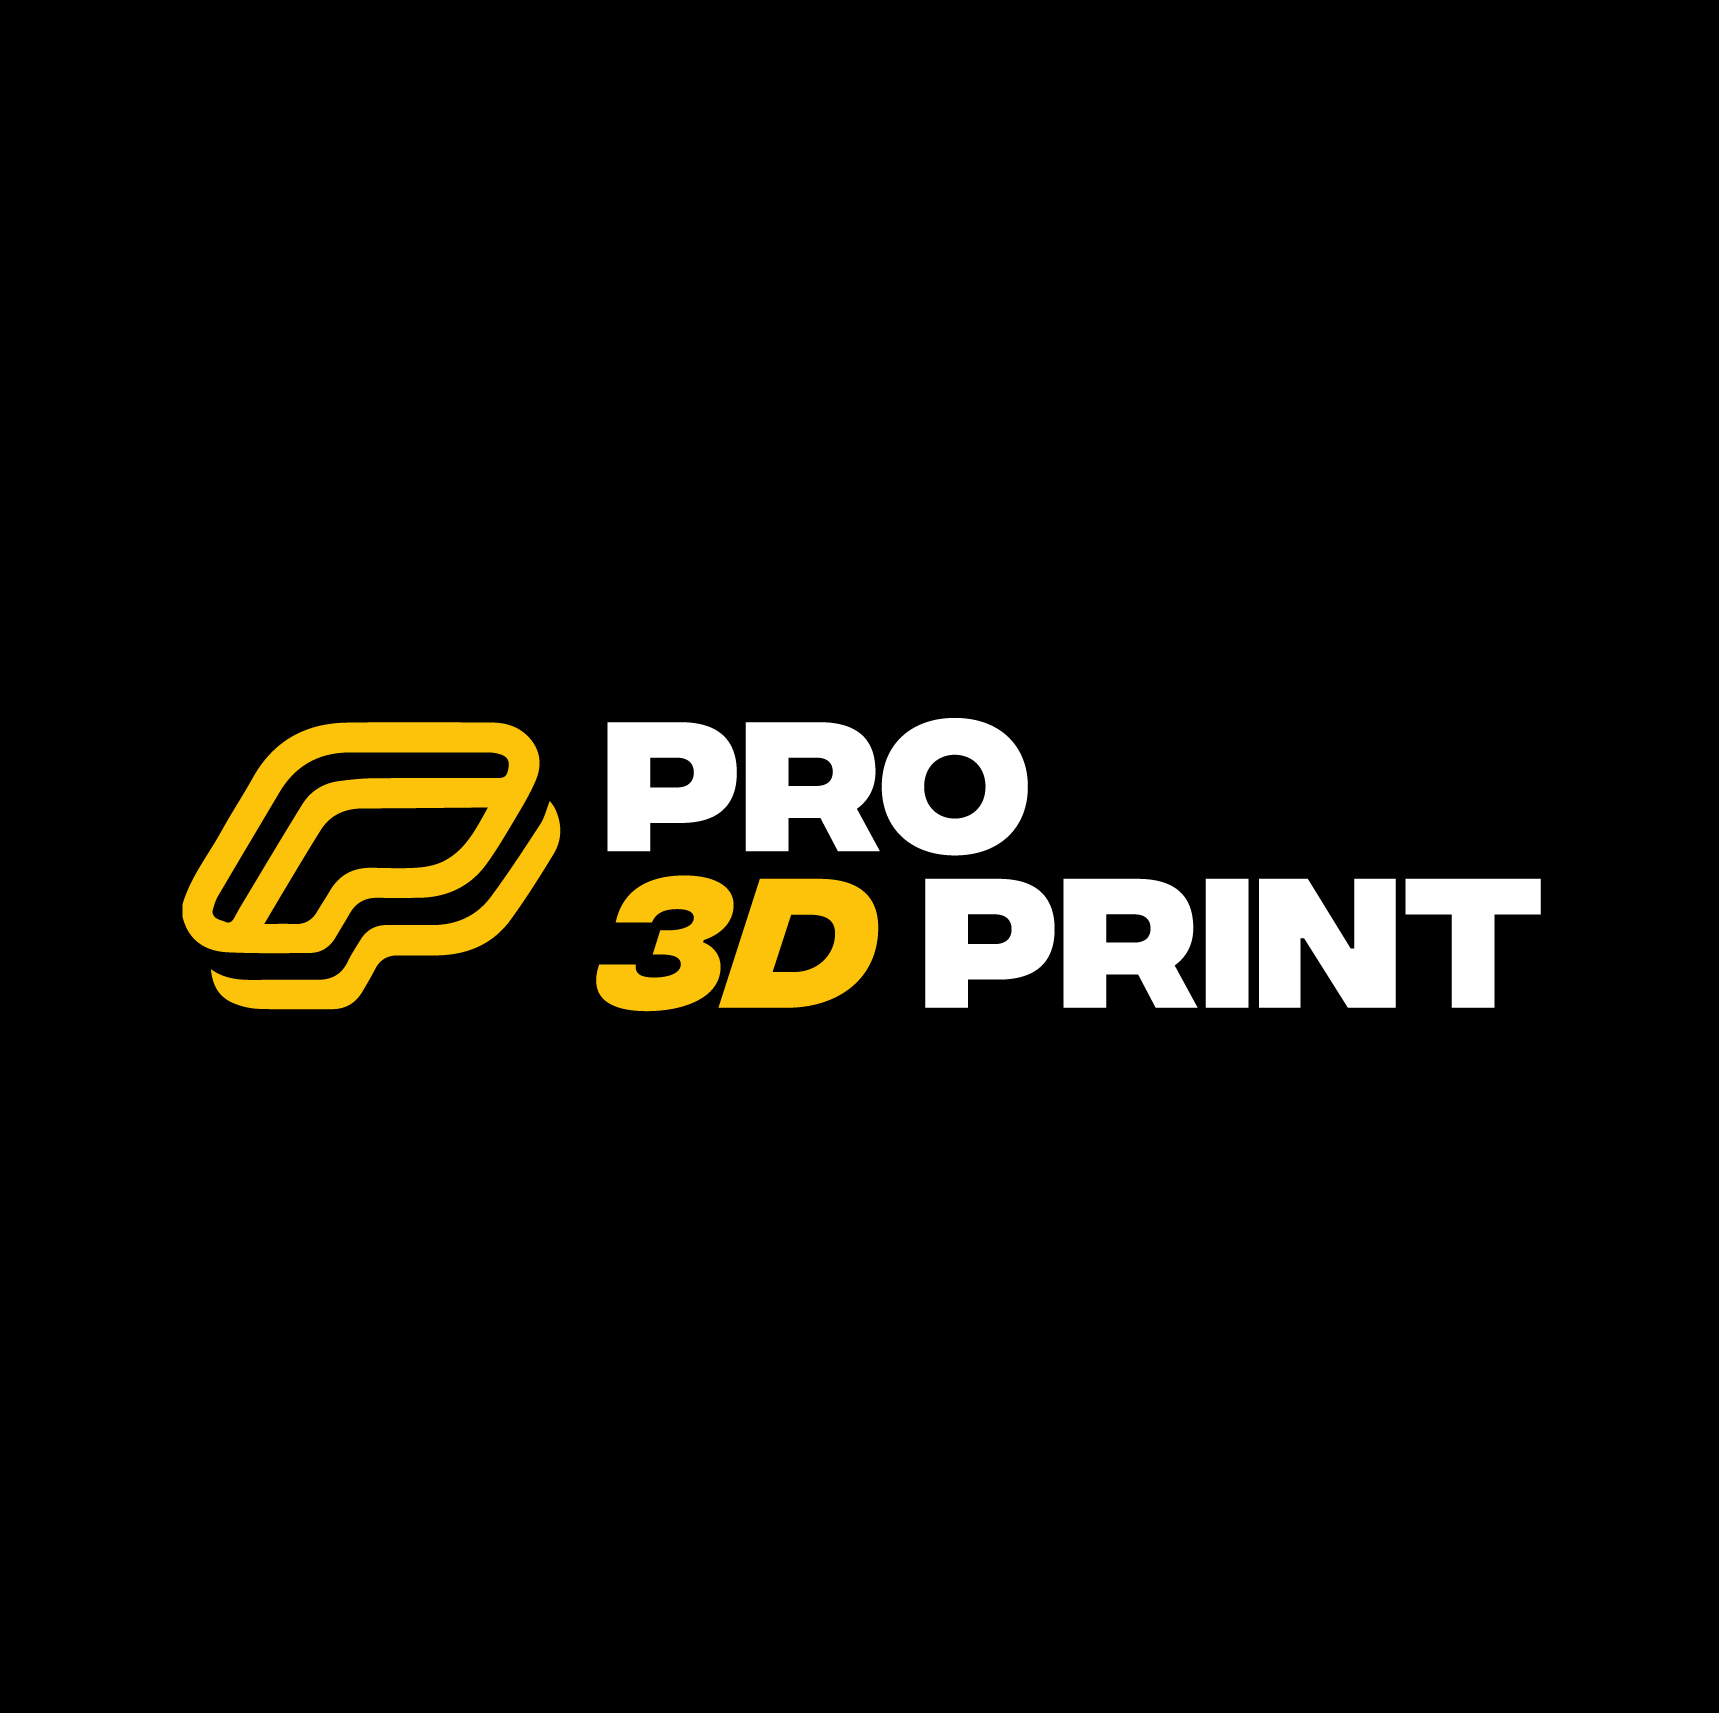 Pro 3D Print